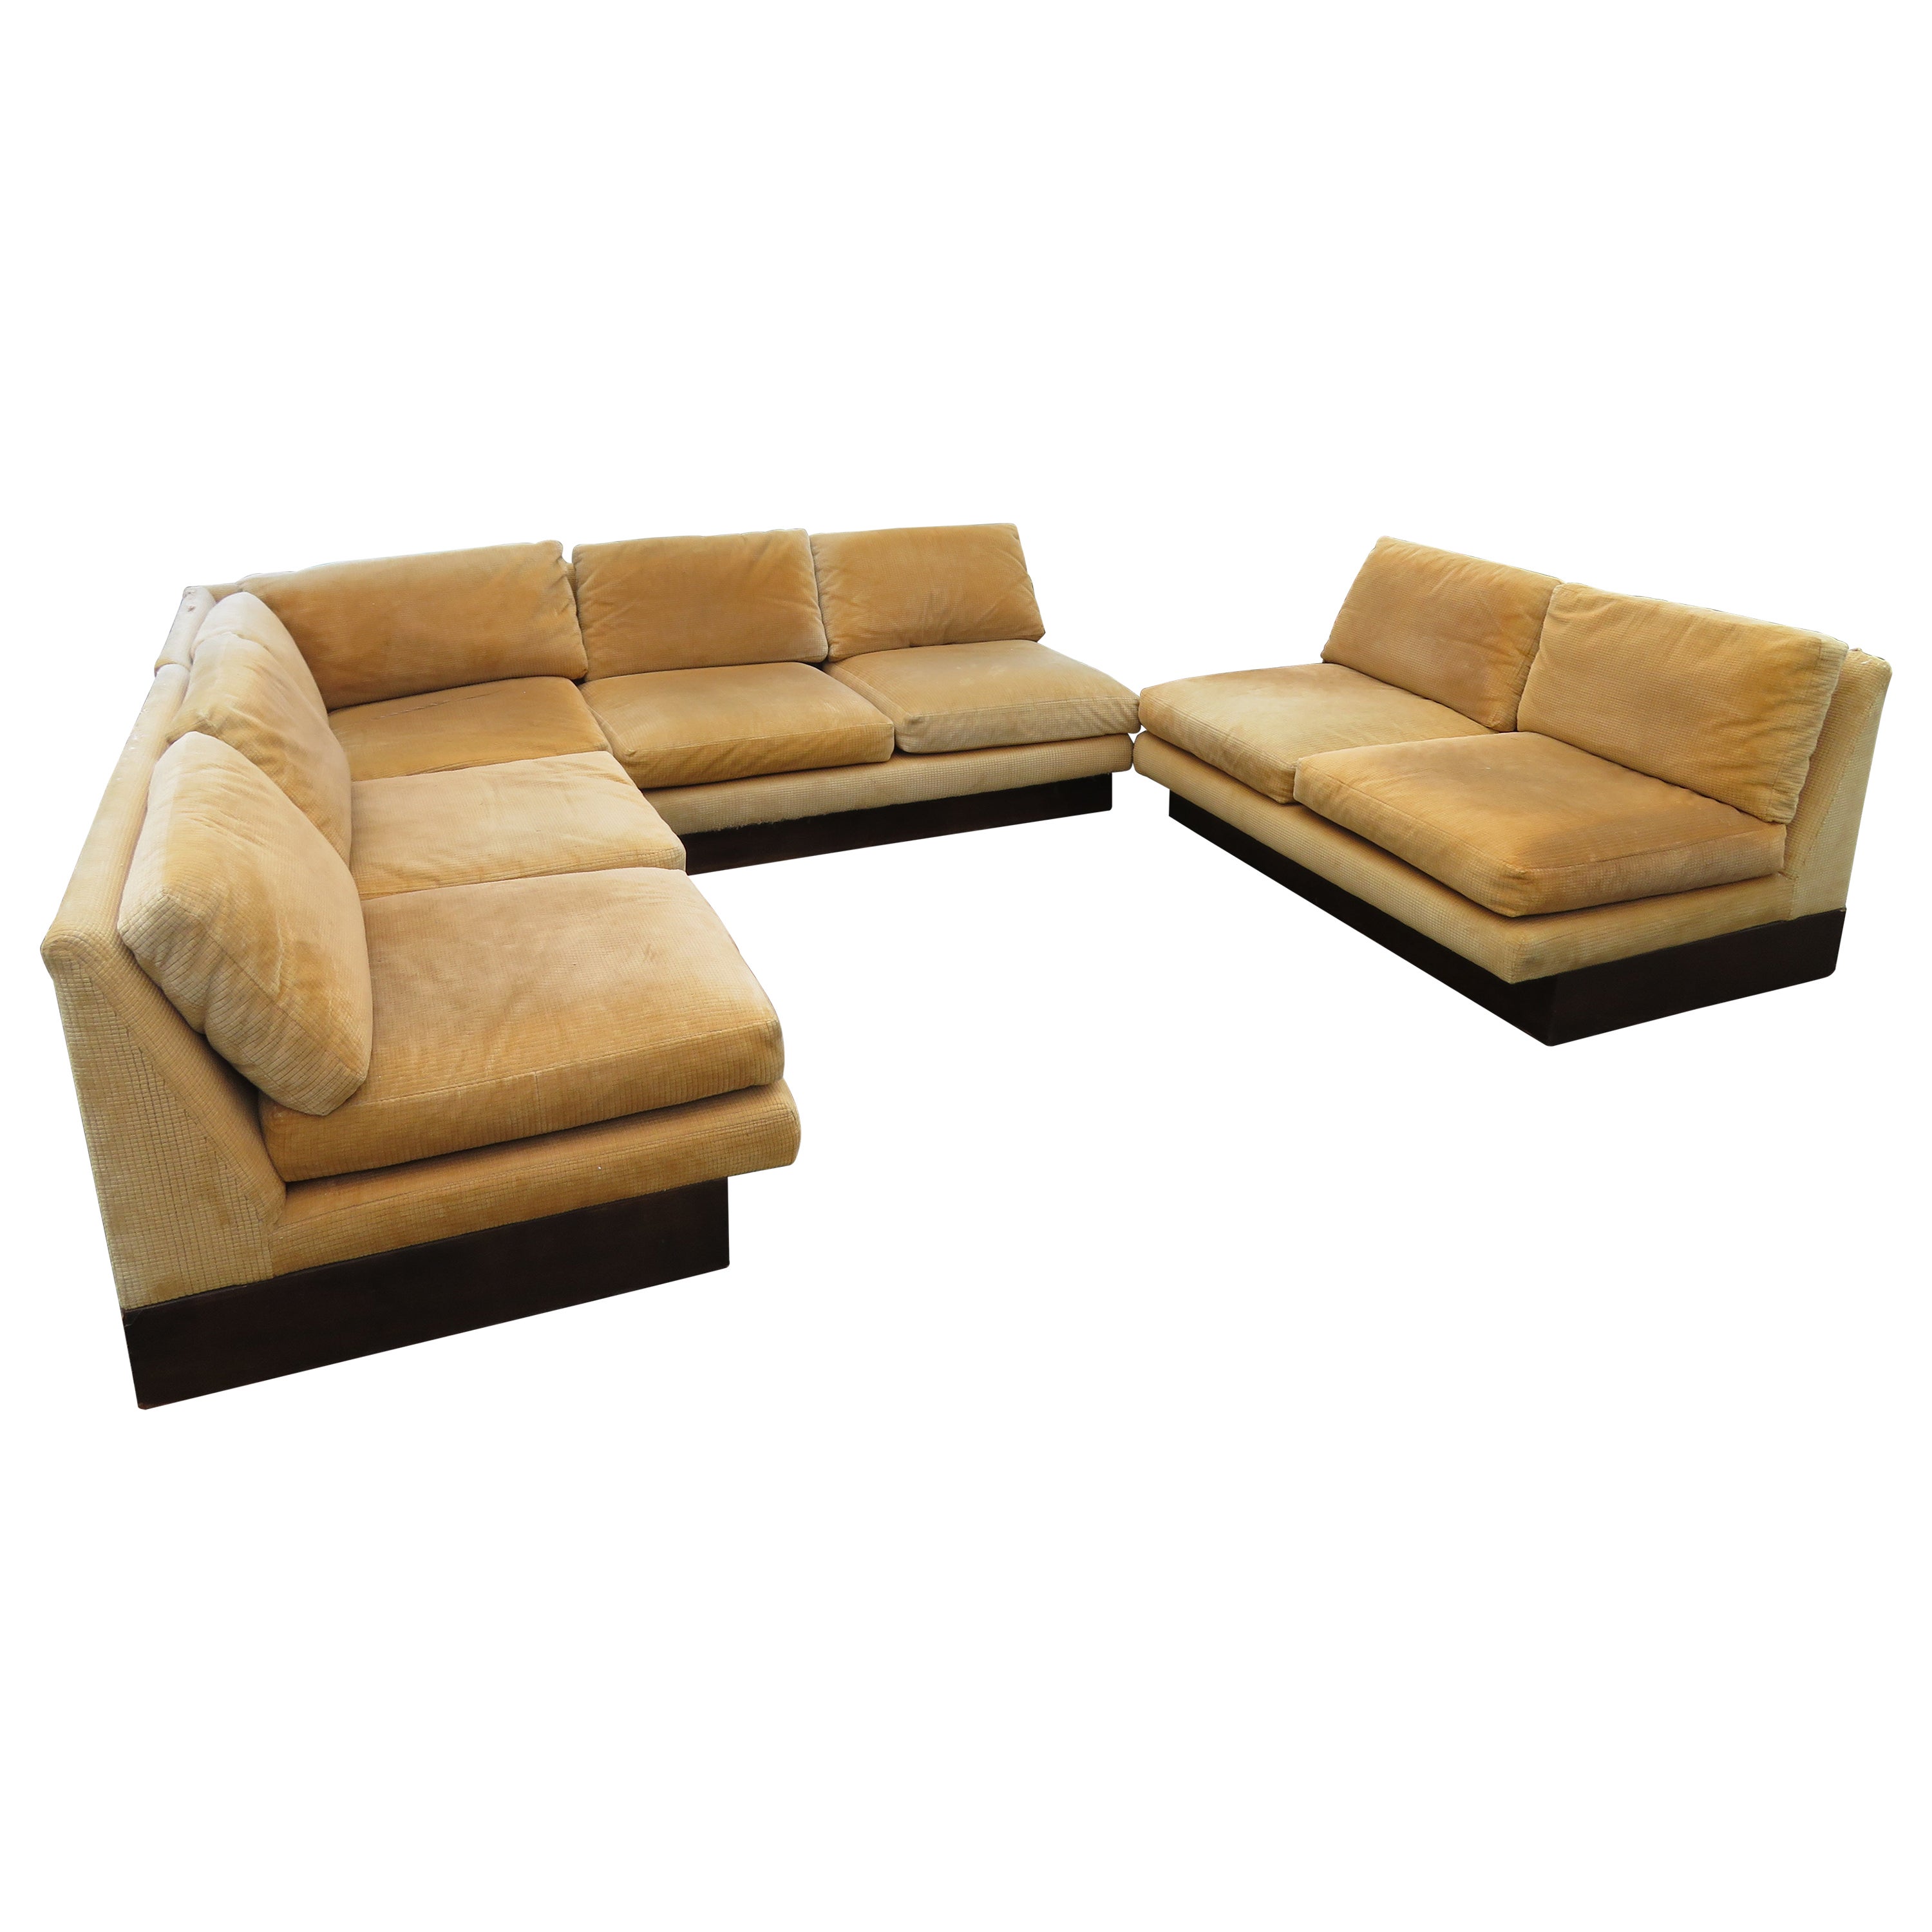 4 Piece Milo Baughman Style Platform Sectional Sofa Mid-Century Modern